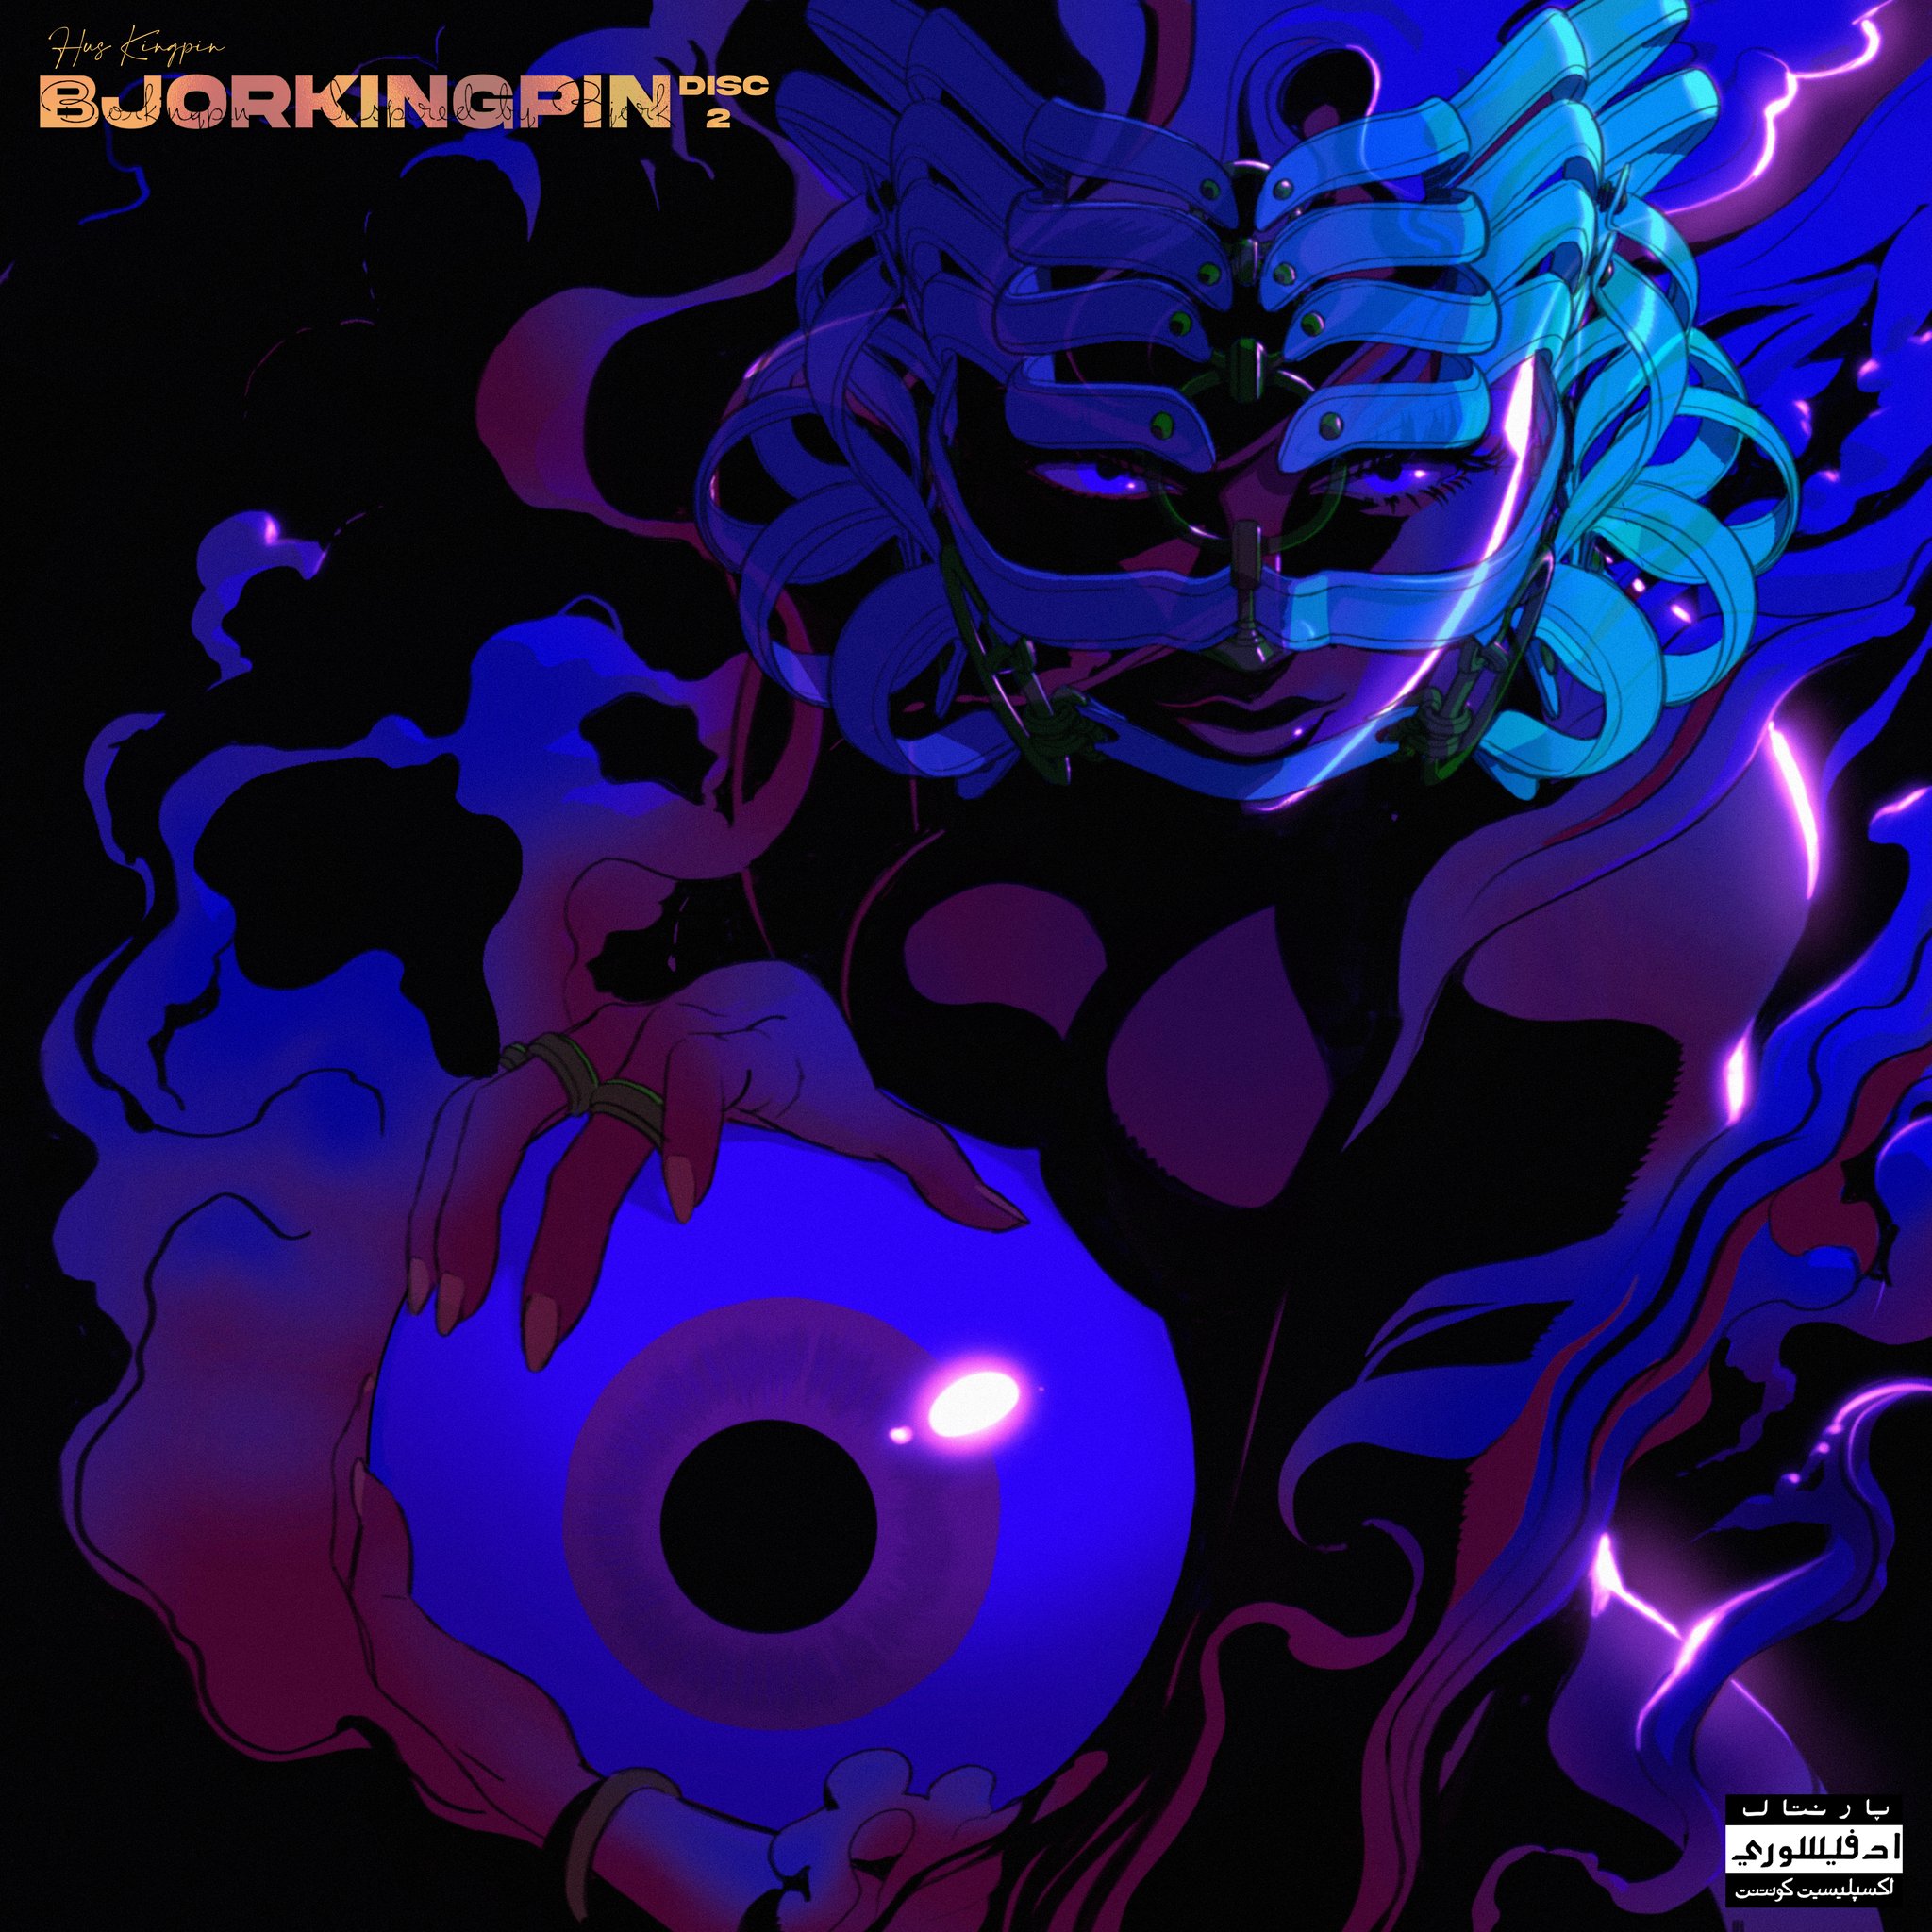 Hus Kingpin Bjorkingpin B Side Reviews Album Of The Year